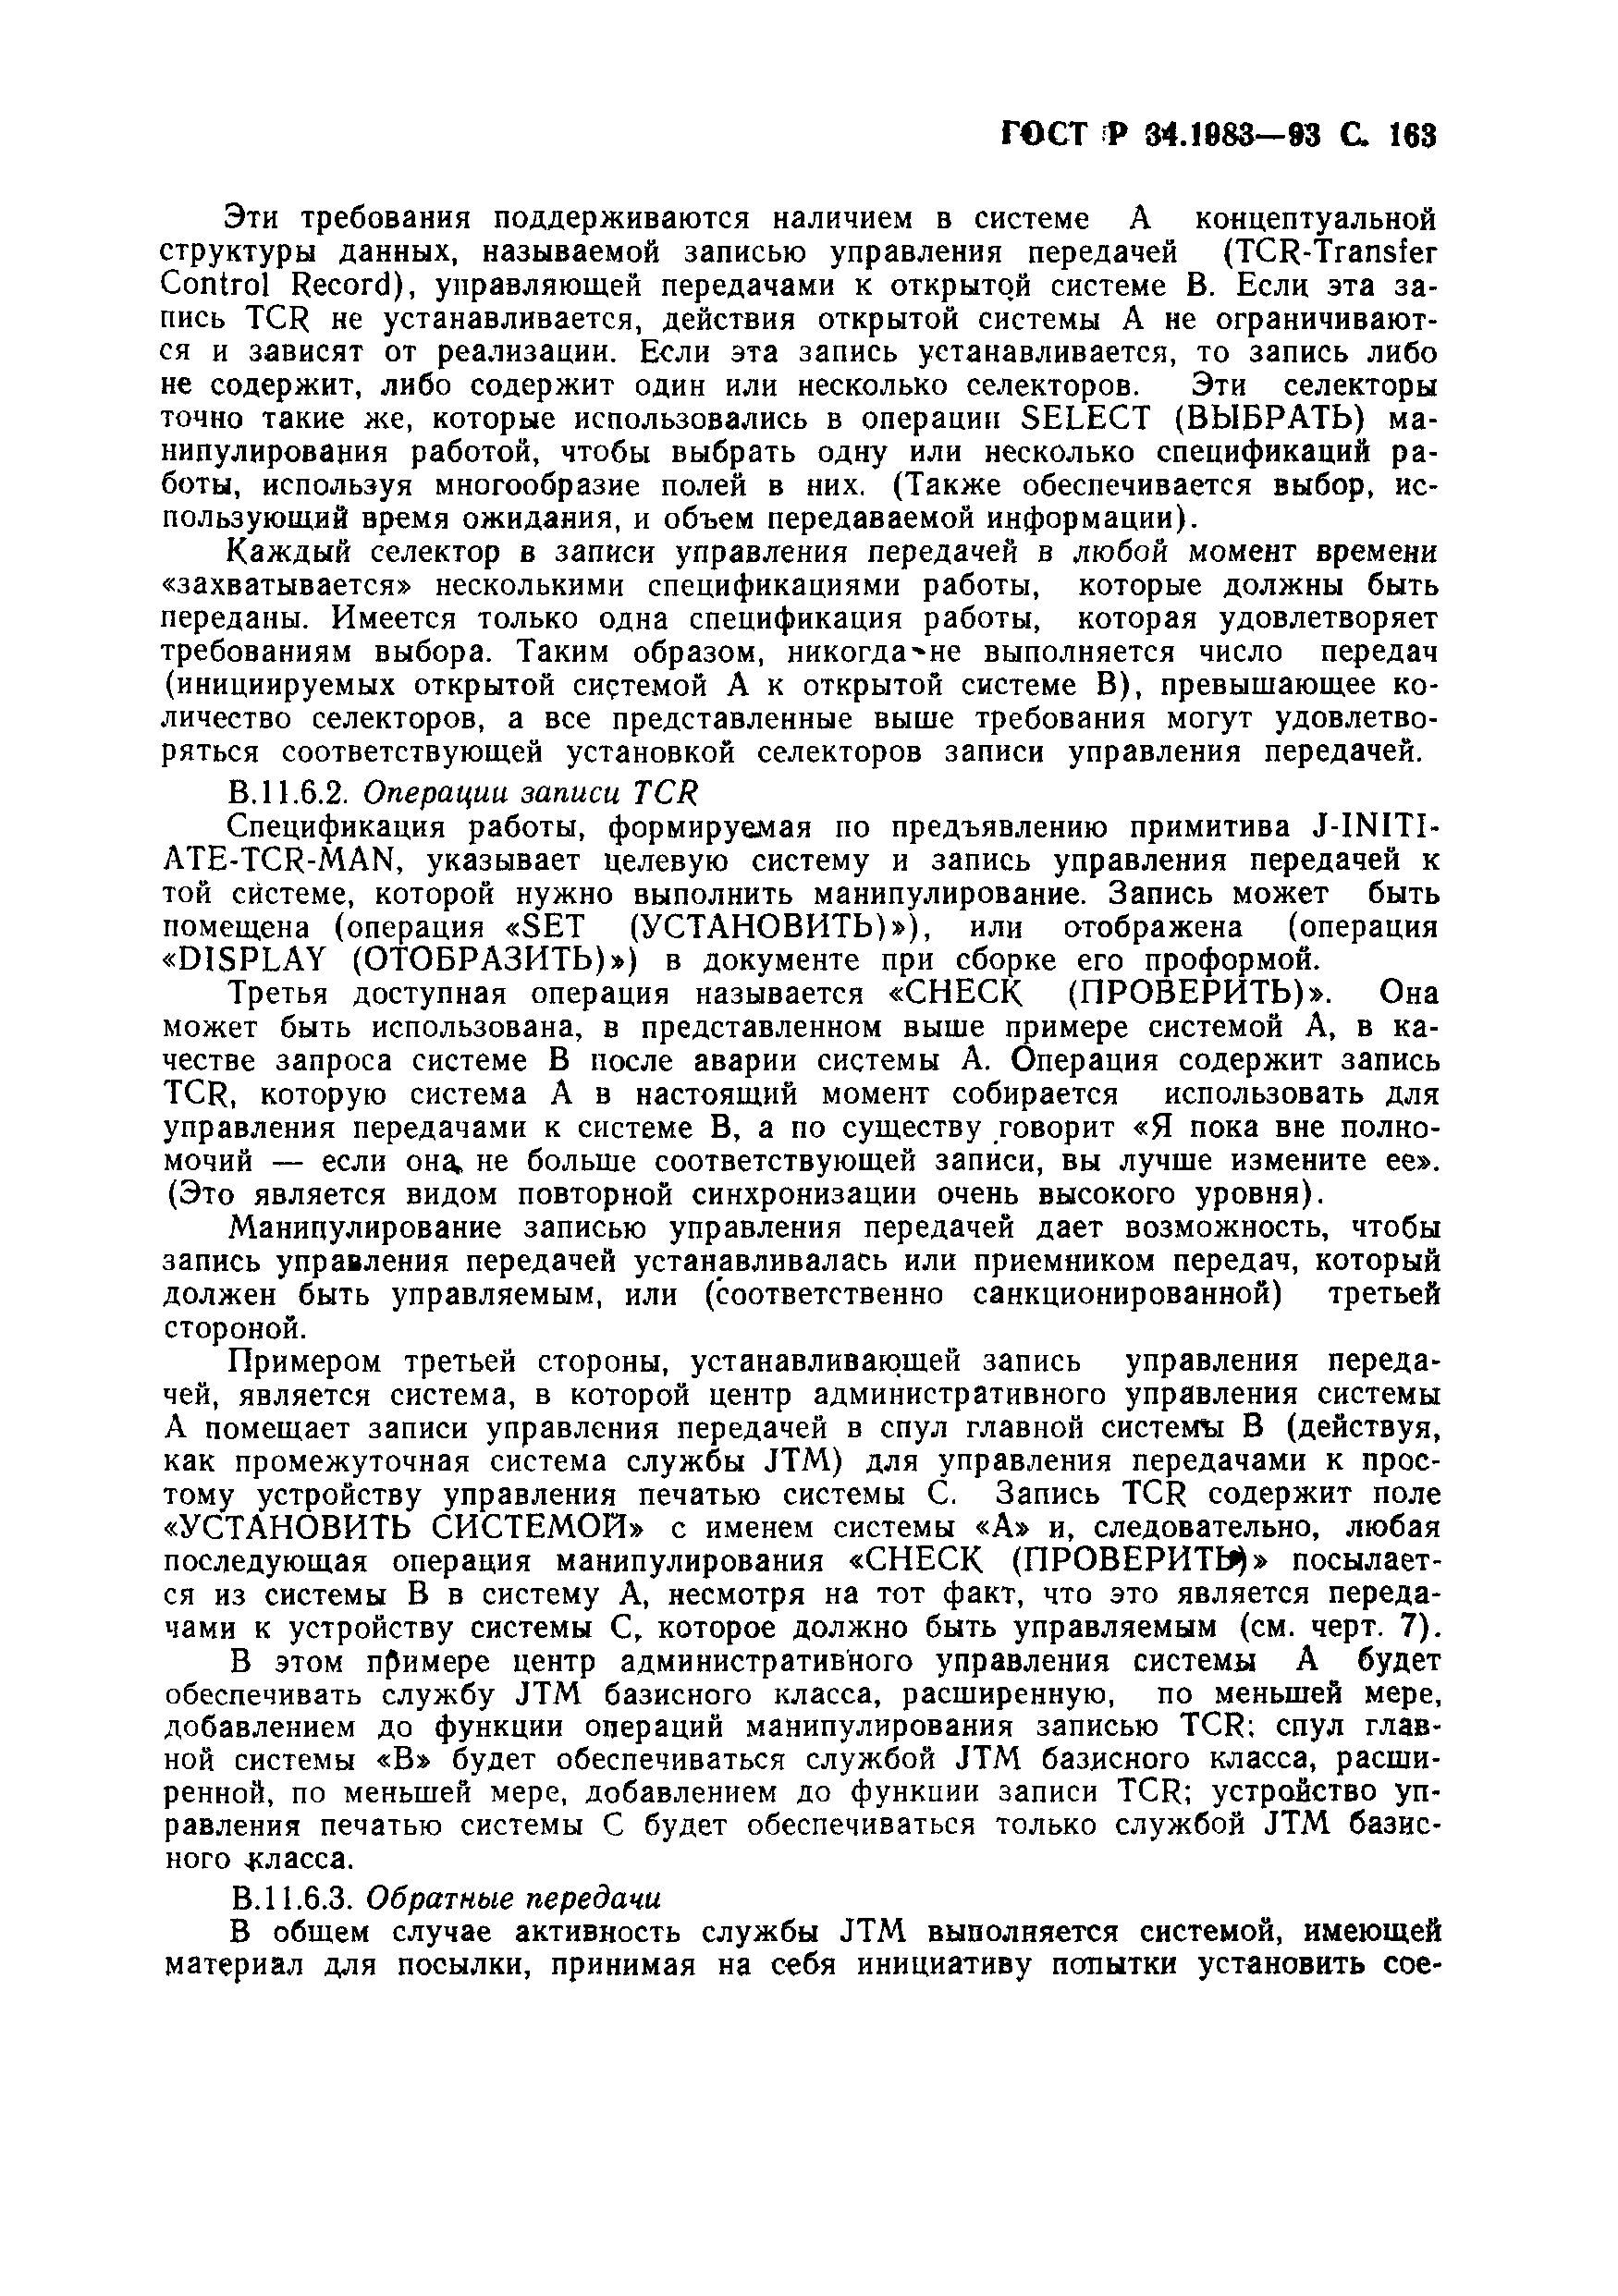 ГОСТ Р 34.1983-93. Страница 164